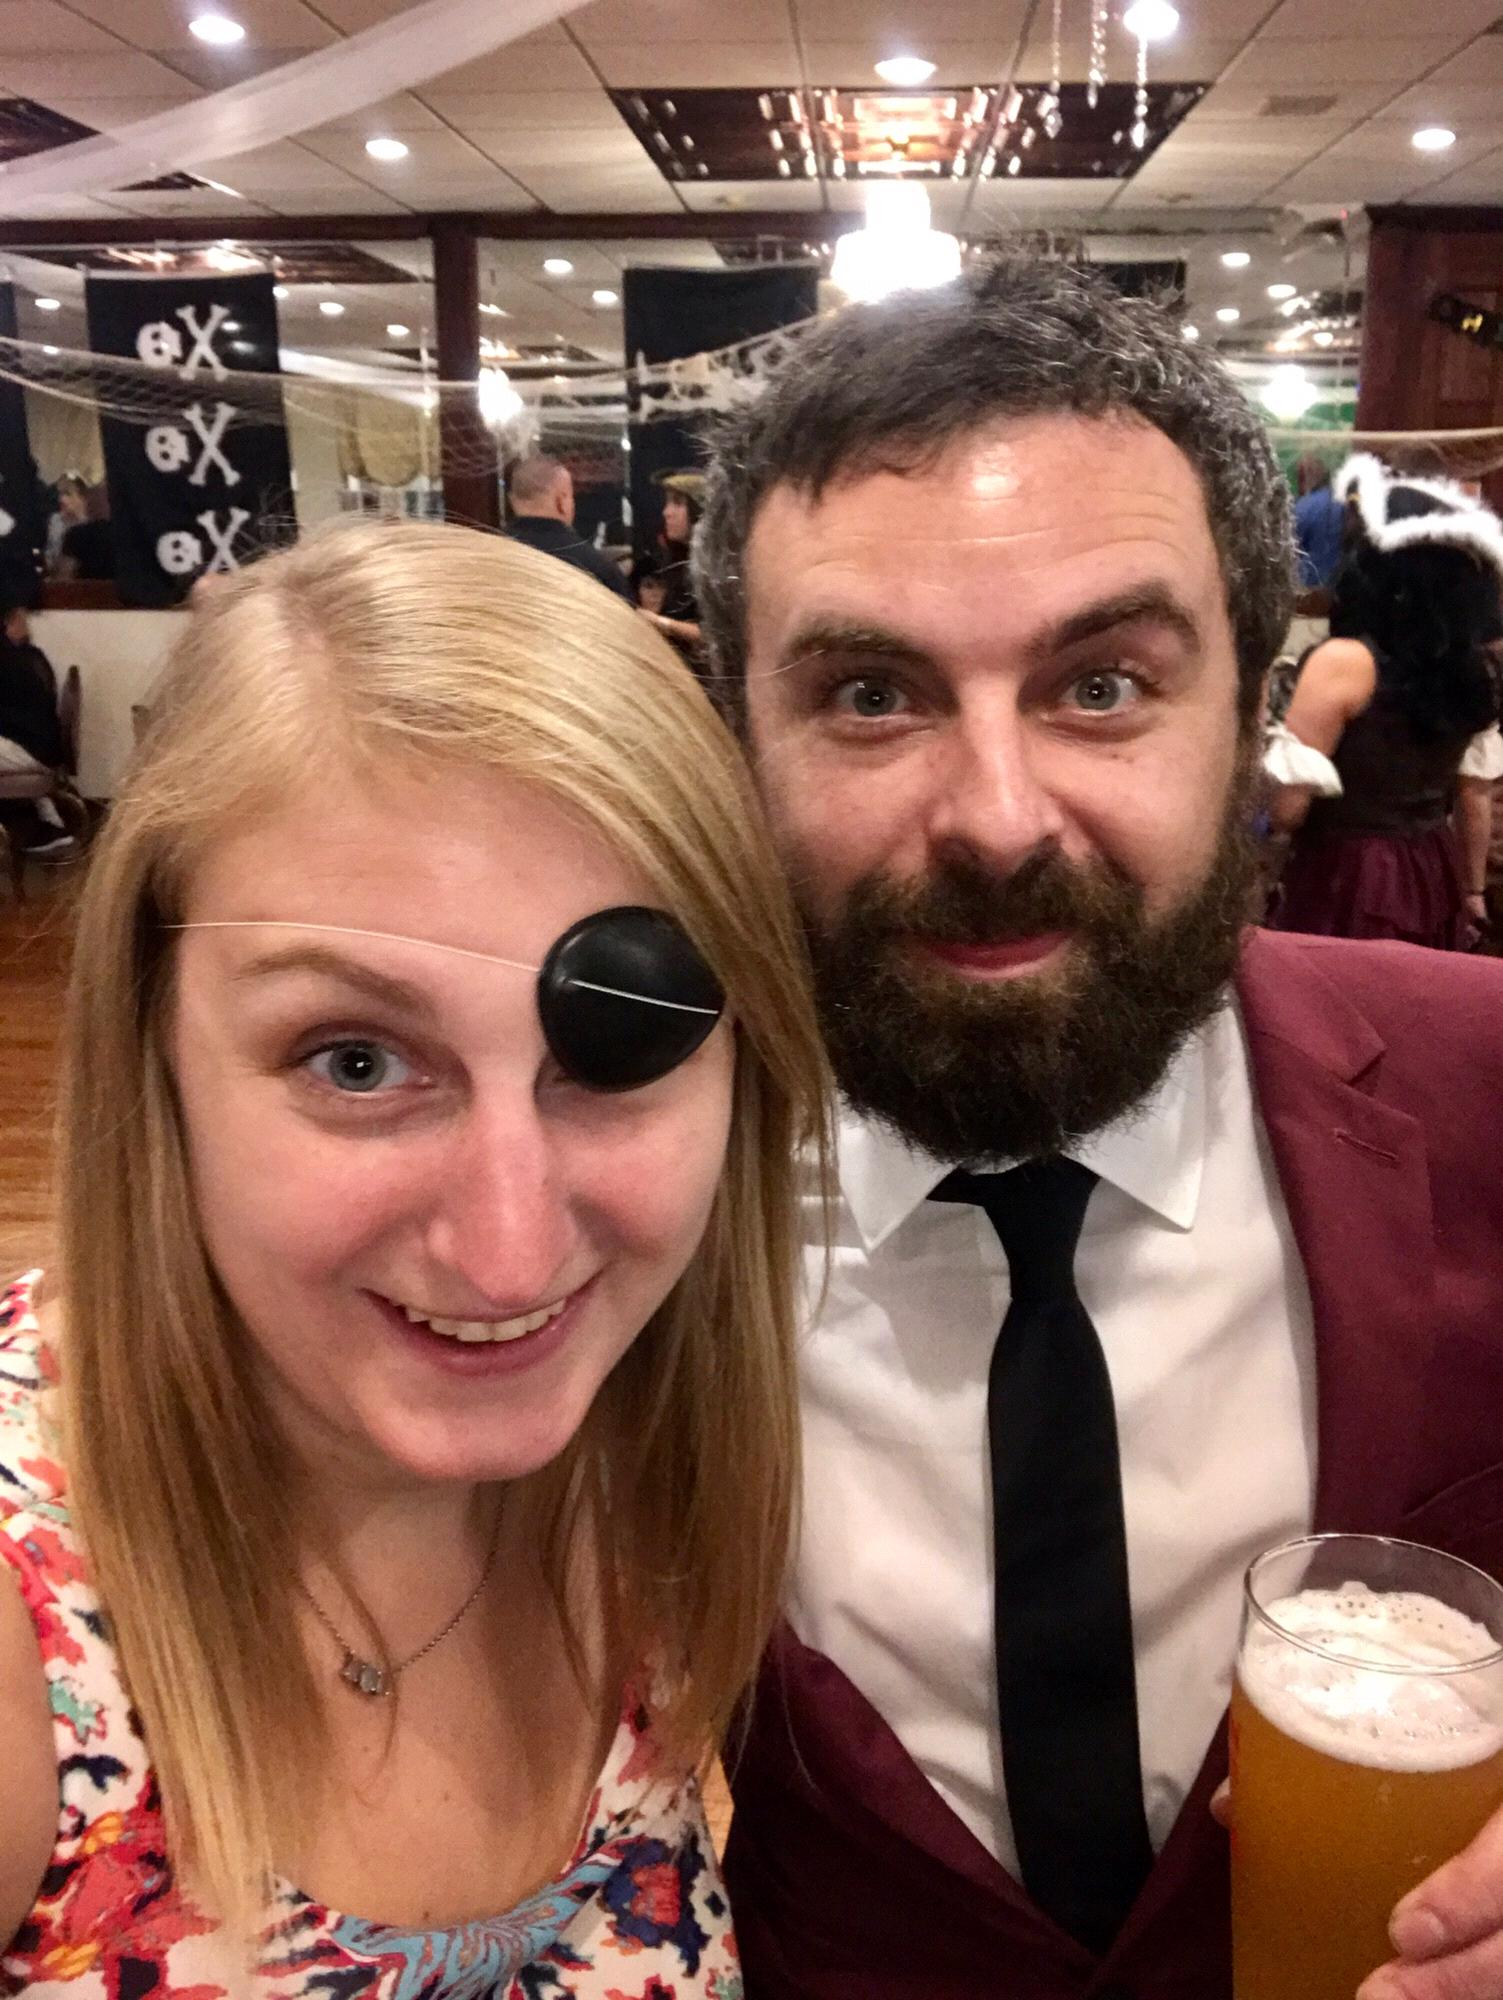 Pirate fun at Tony & Laura’s wedding!